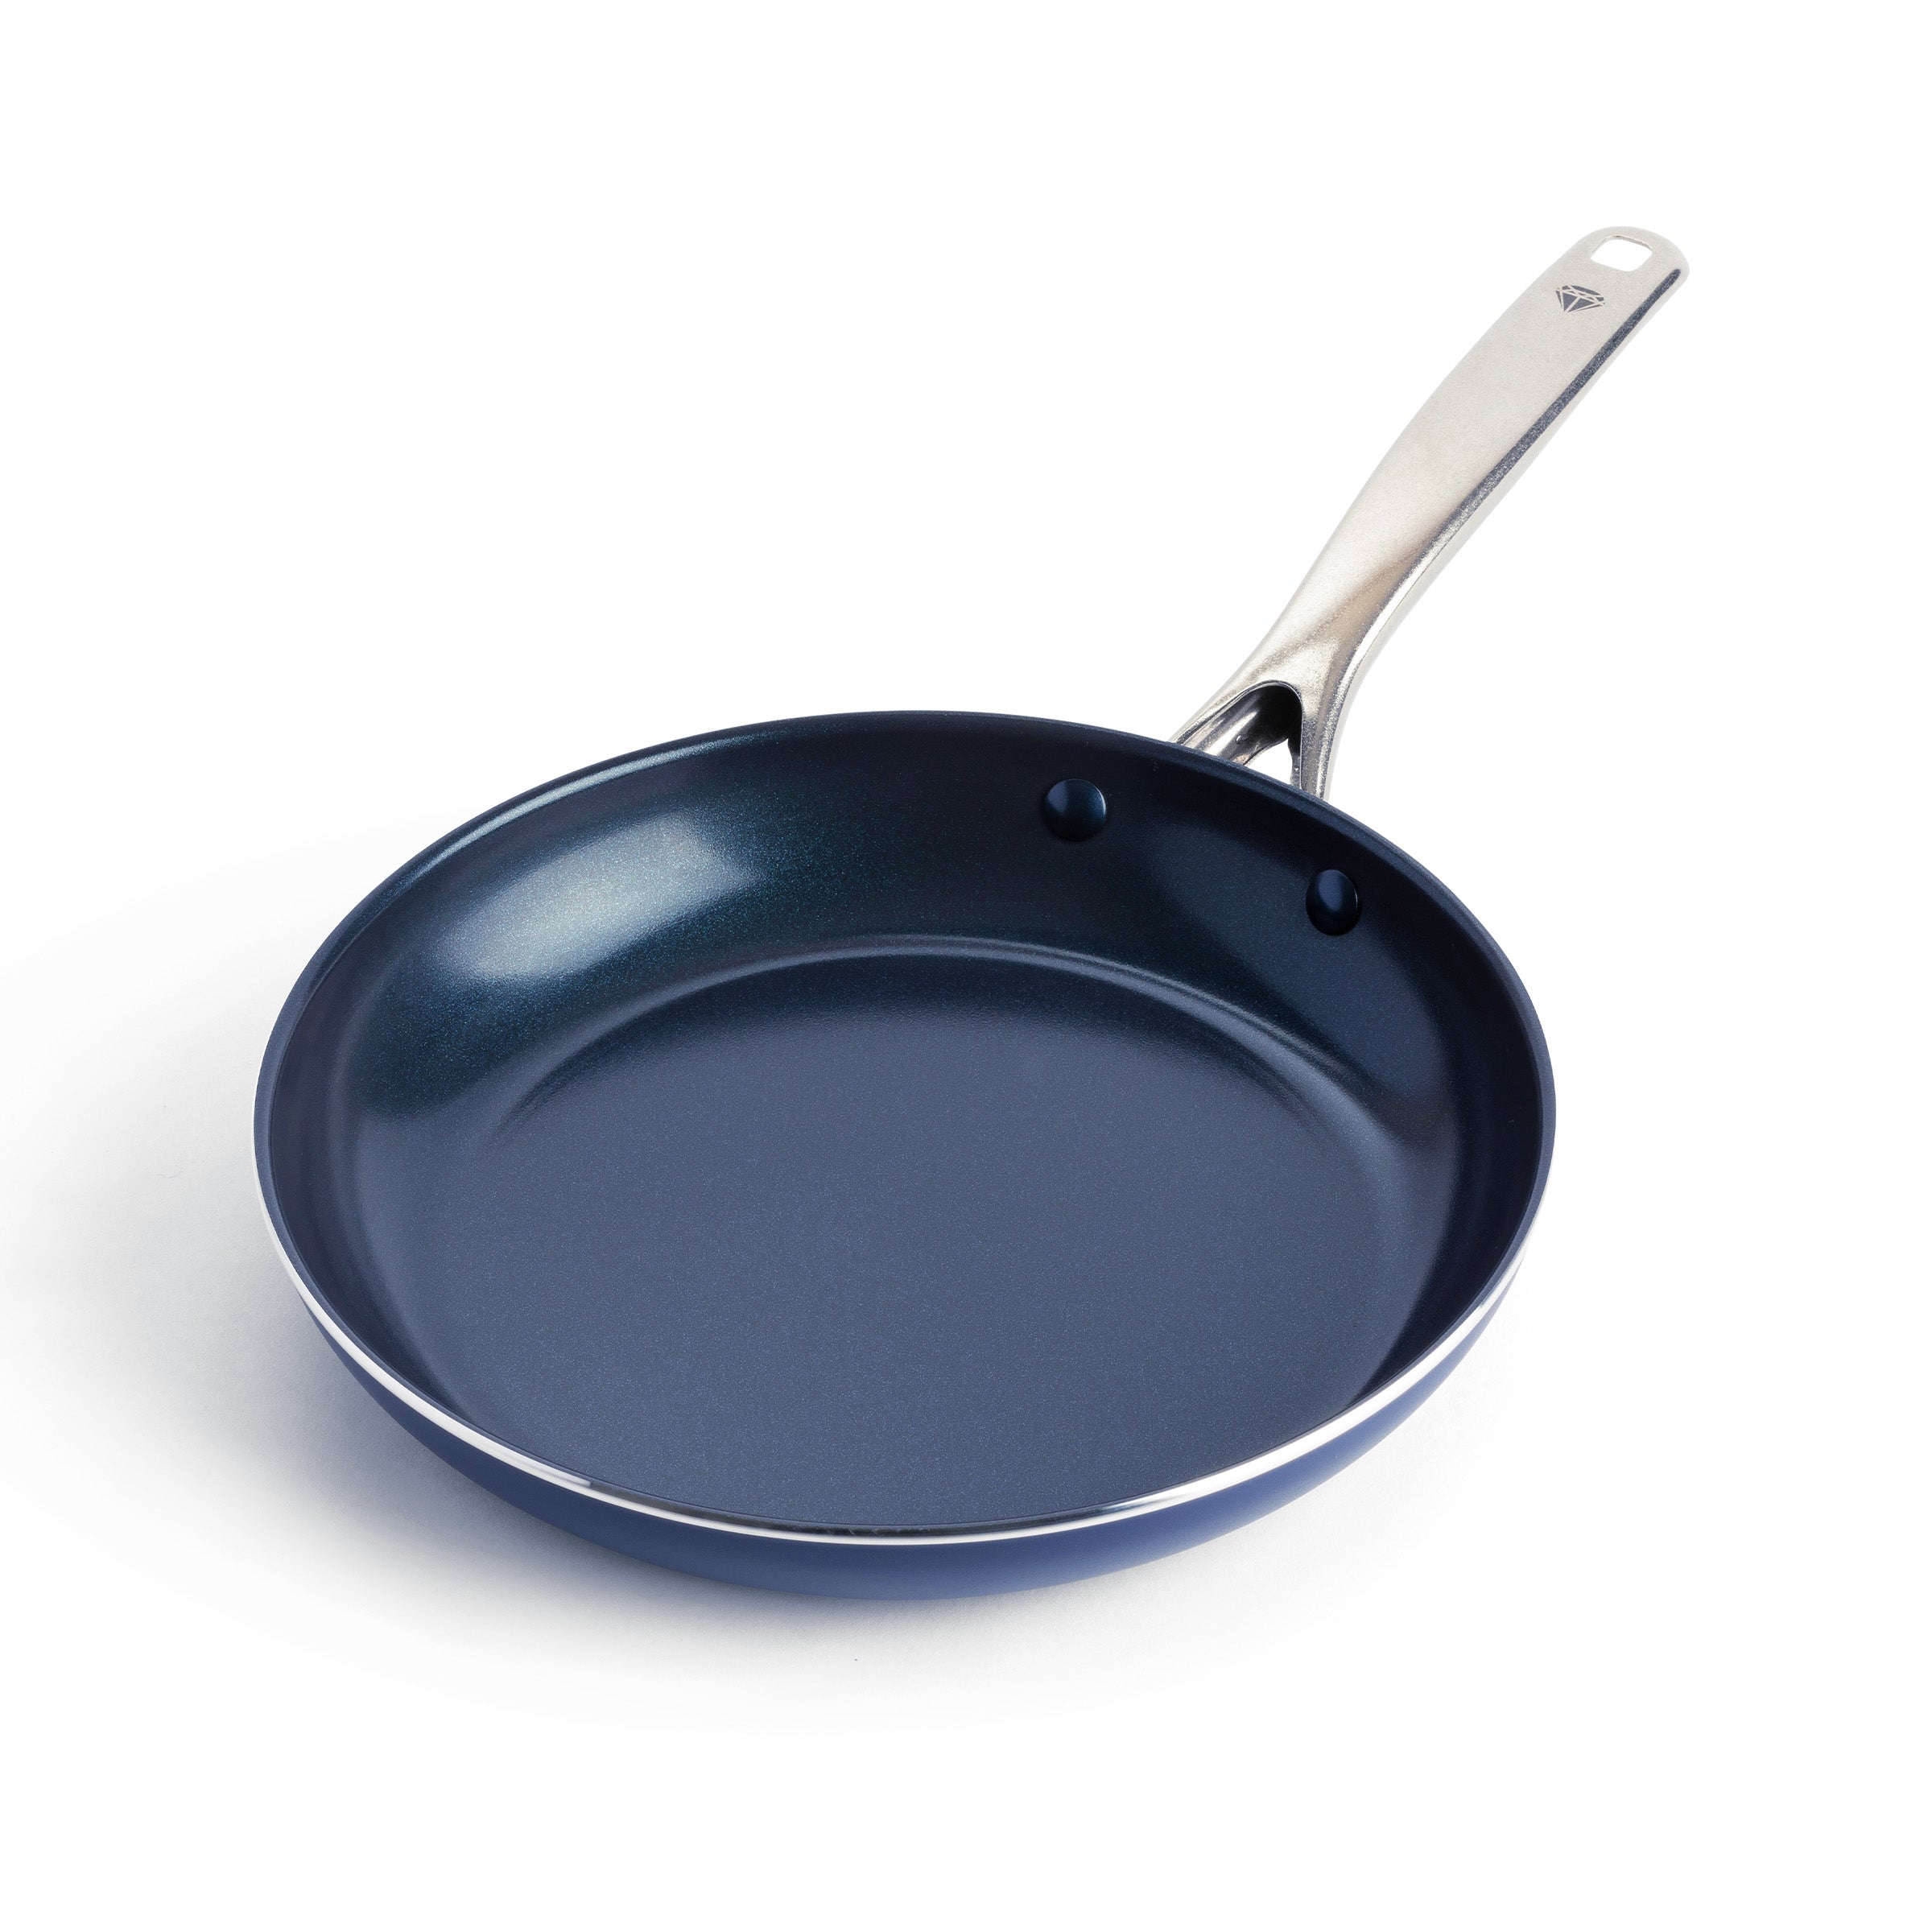 GoodCook Healthy Ceramic Titanium-infused Fry pan, 10 Inch, Light Blue -  GoodCook